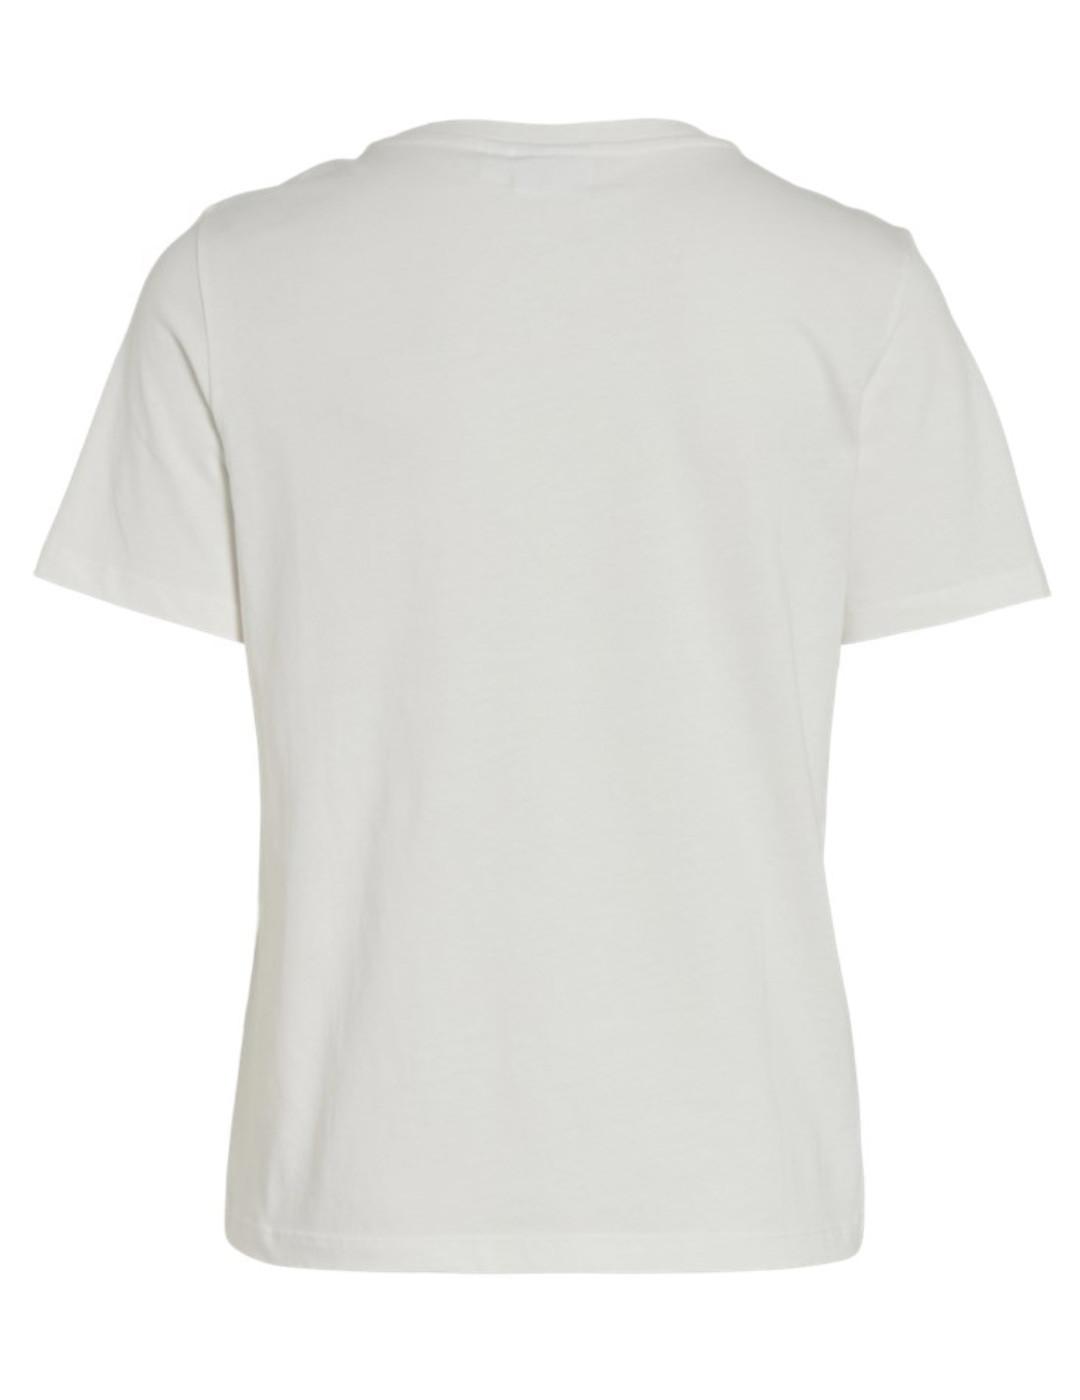 Camiseta Vila Sybilla blanco yourself manga corta de mujer